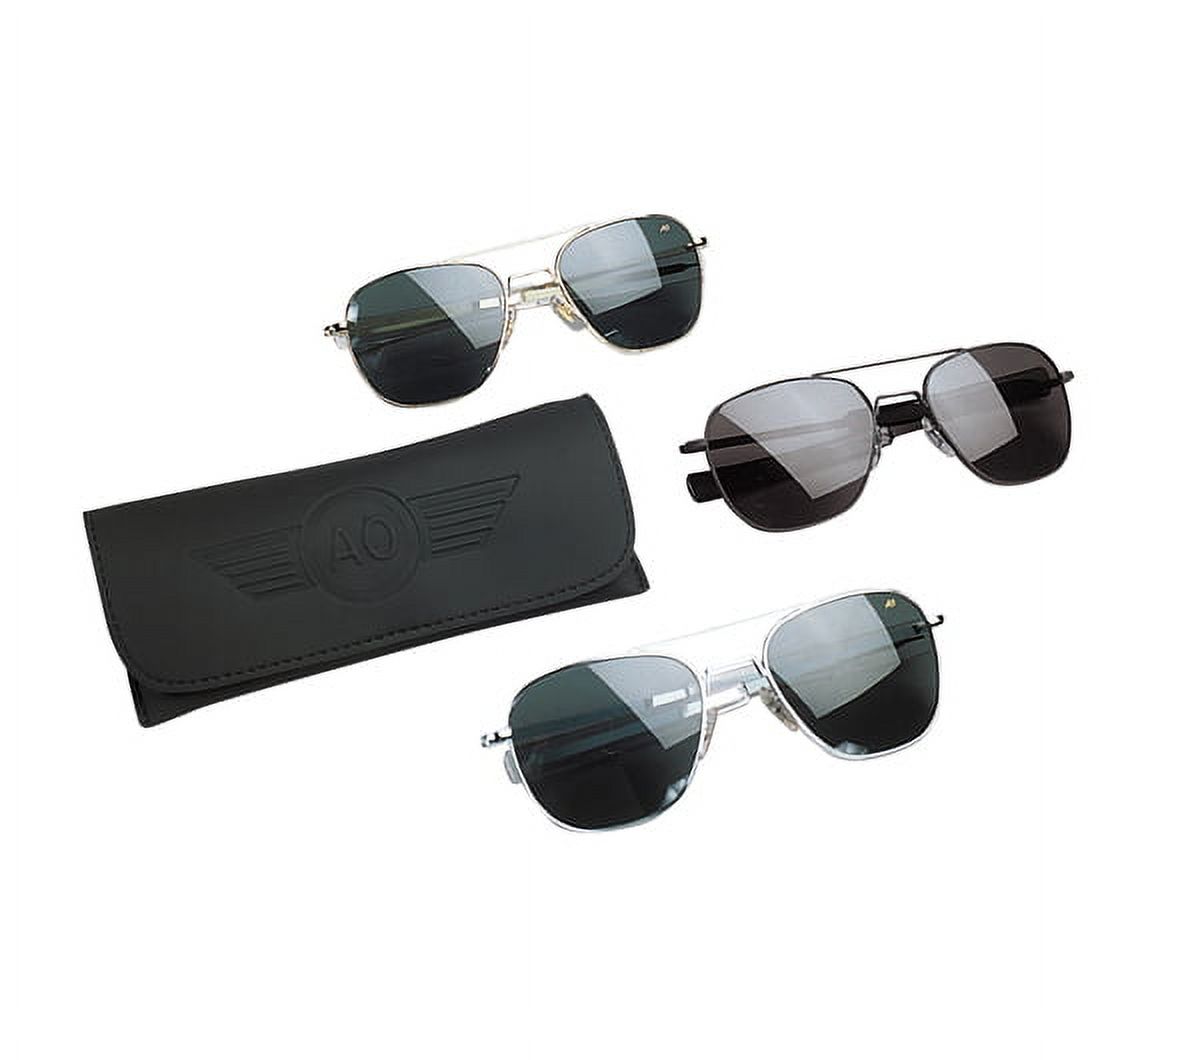 American Optics 52MM Polarized Sunglasses - 10706 - Chrome - image 1 of 4